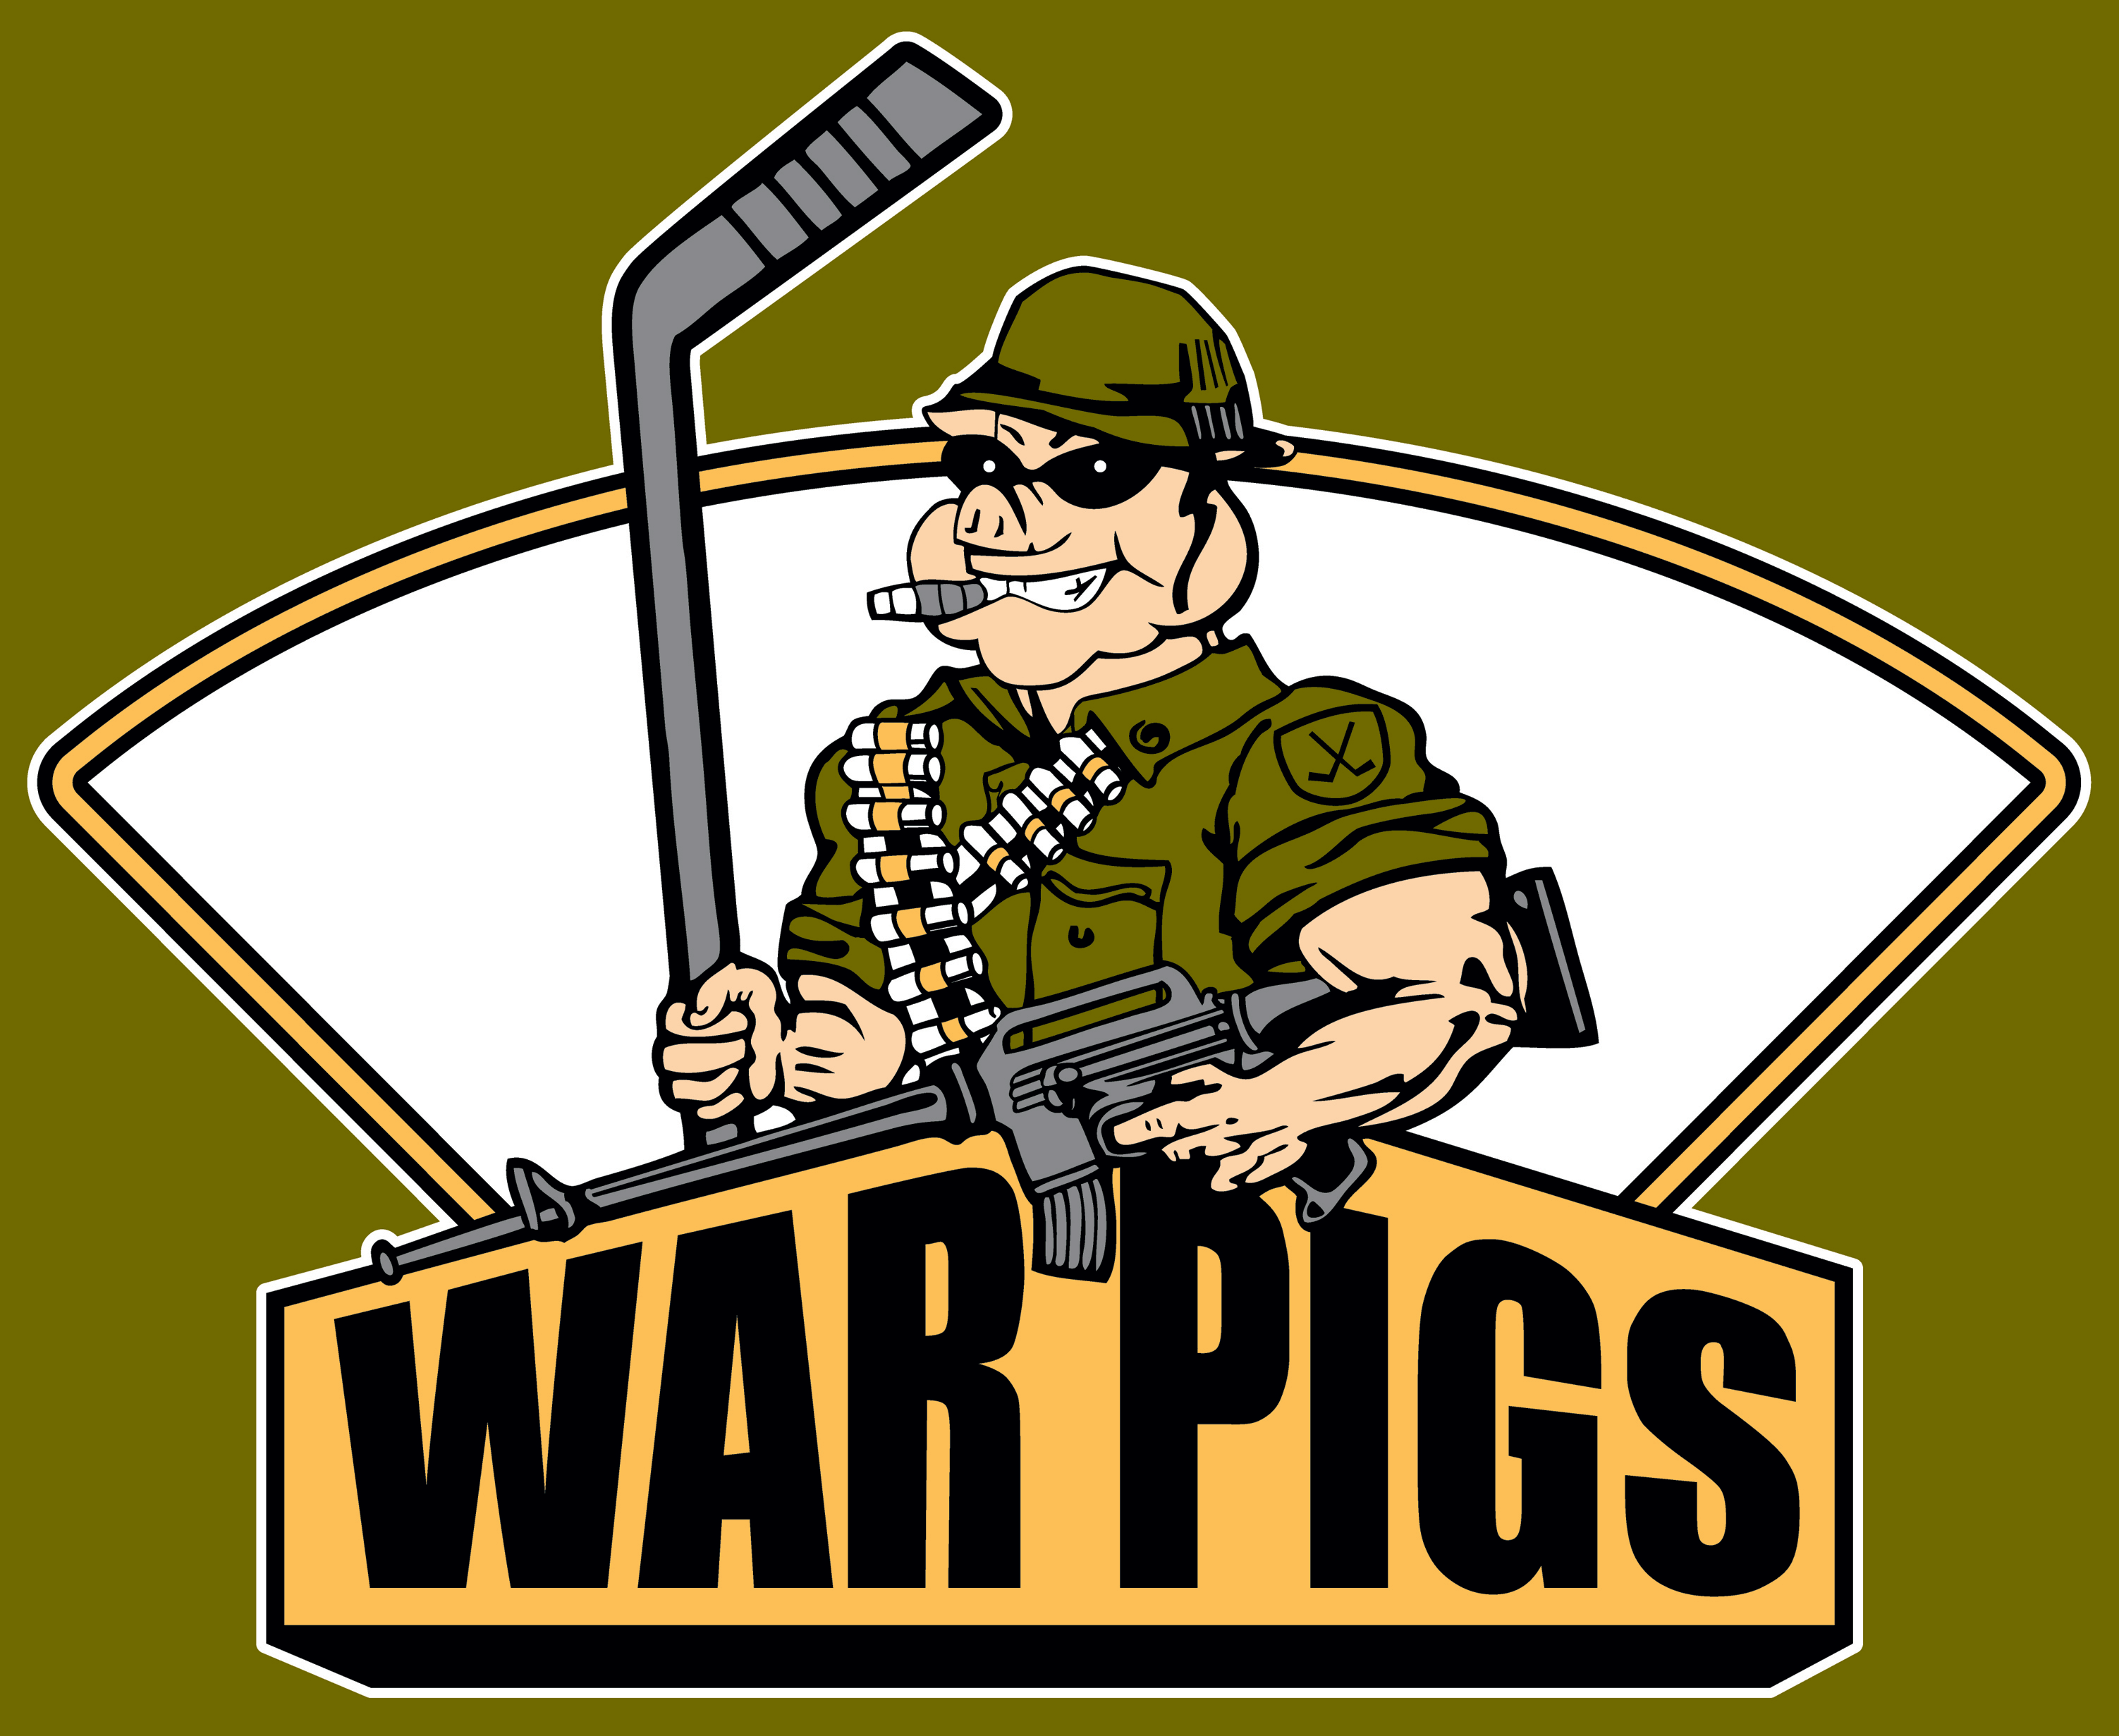 Funny Hockey Logo - War Pigs Web Site - Funny Stuff